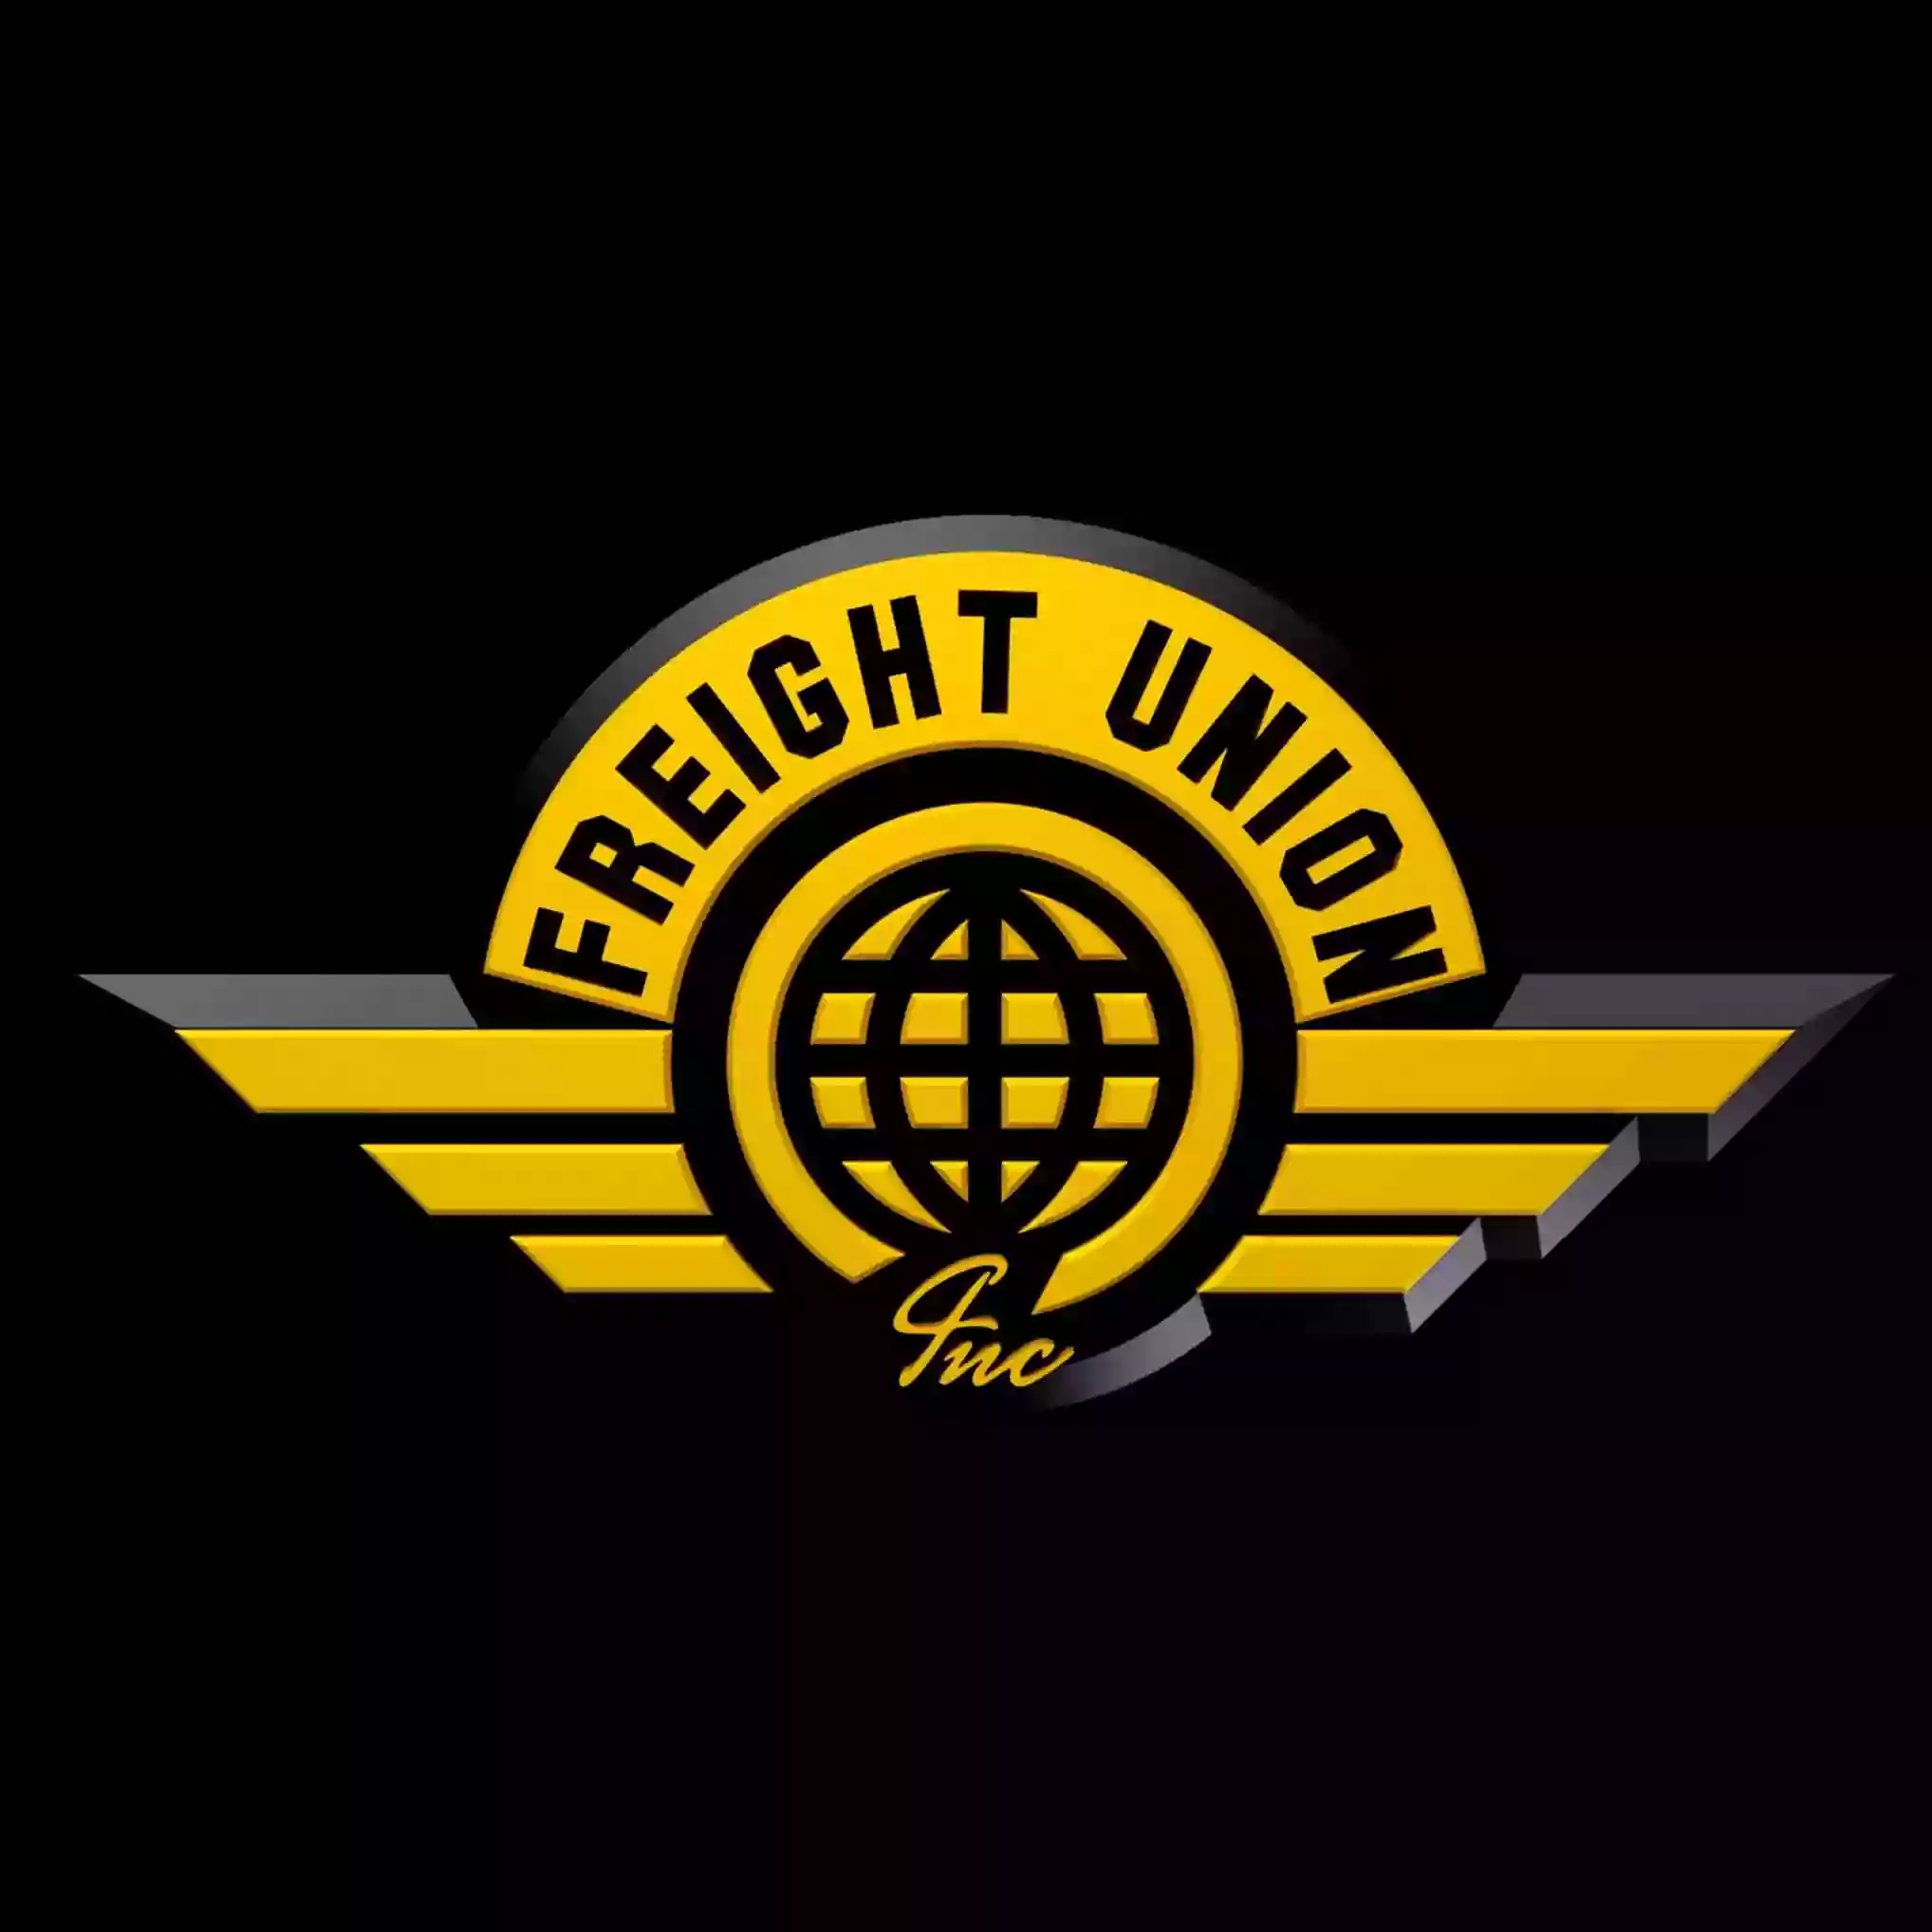 Freight Union Inc